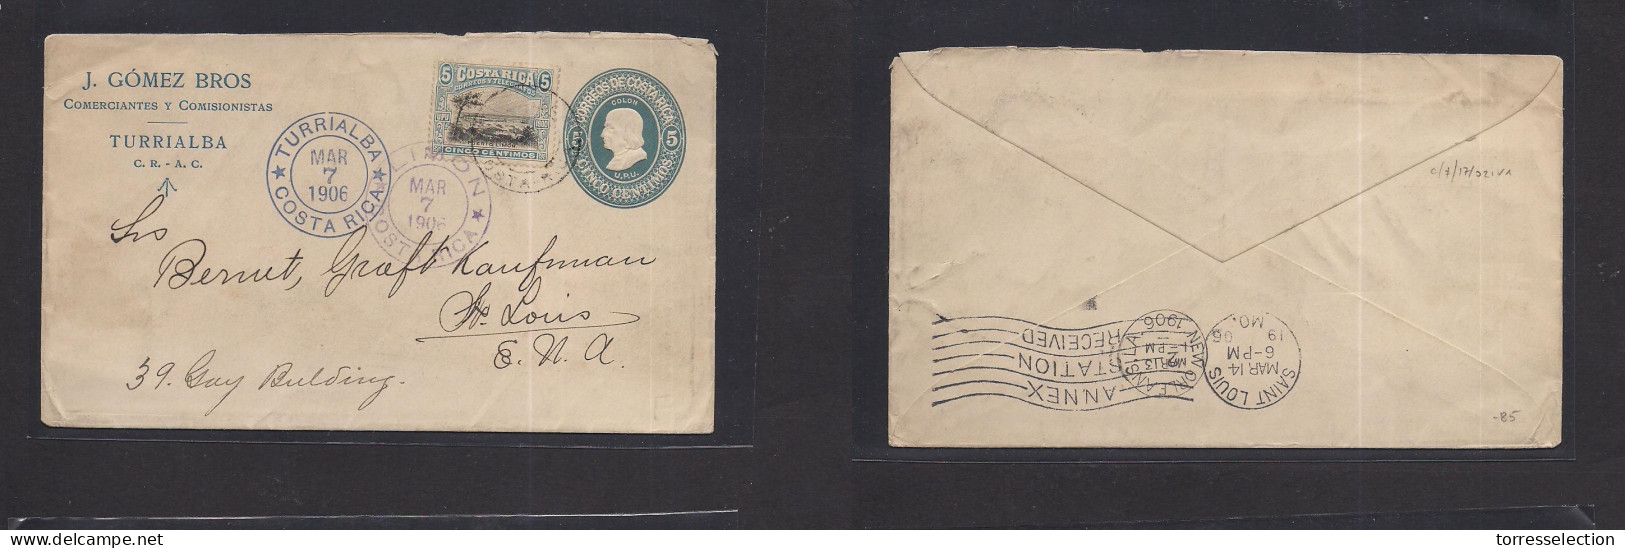 COSTA RICA. 1906 (7 March) Turrialba - USA, St. Louis, Miss. 5c Blue Private Printed Stat Env + Adtl, Blue Cds. - Costa Rica